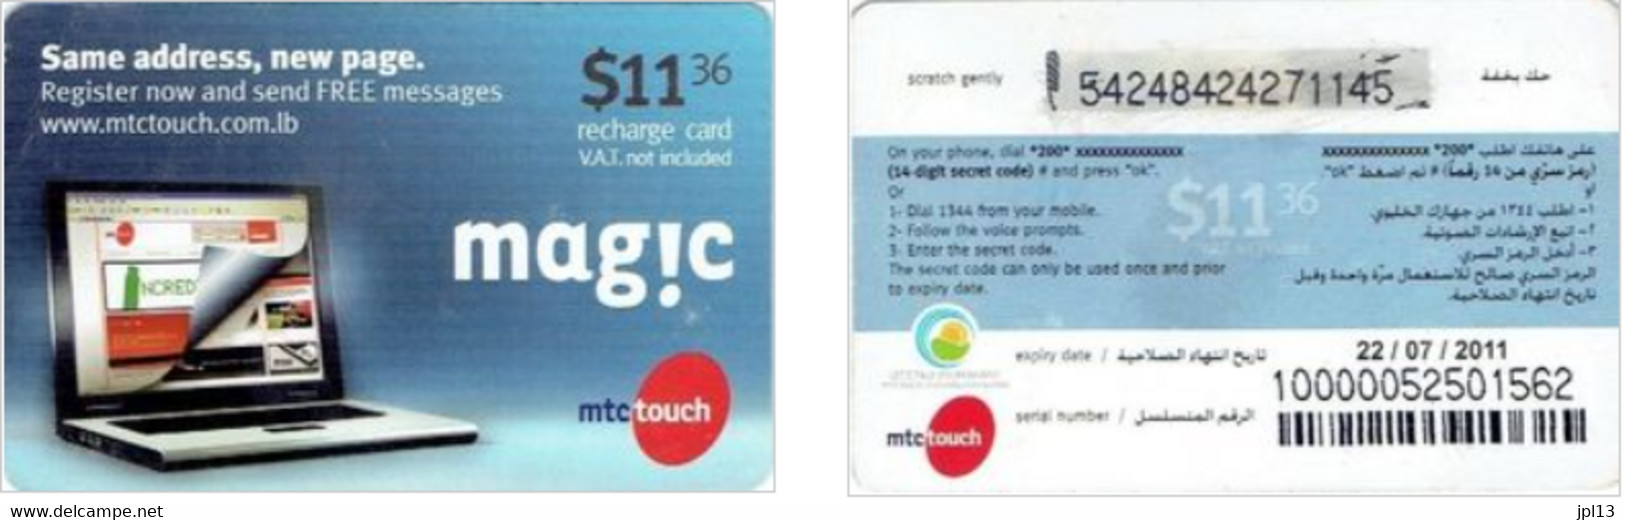 Recharge GSM - Liban - MTC Touch - Magic - Computer $11,36, Exp. 22/09/2011 - Lebanon